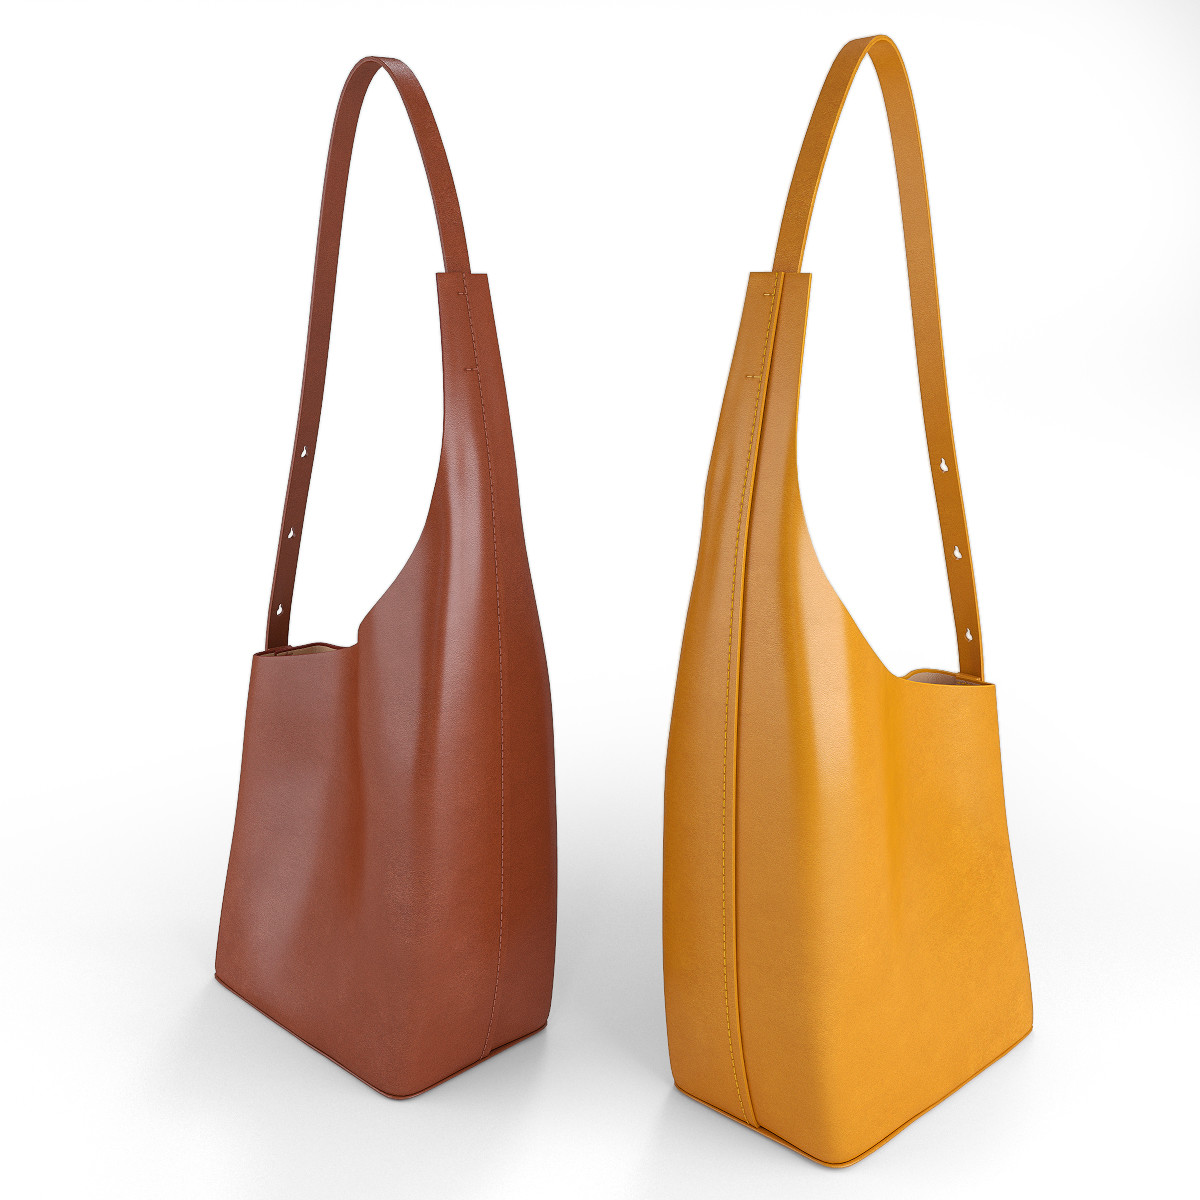 ArtStation - Hermes Birkin Female Handbags